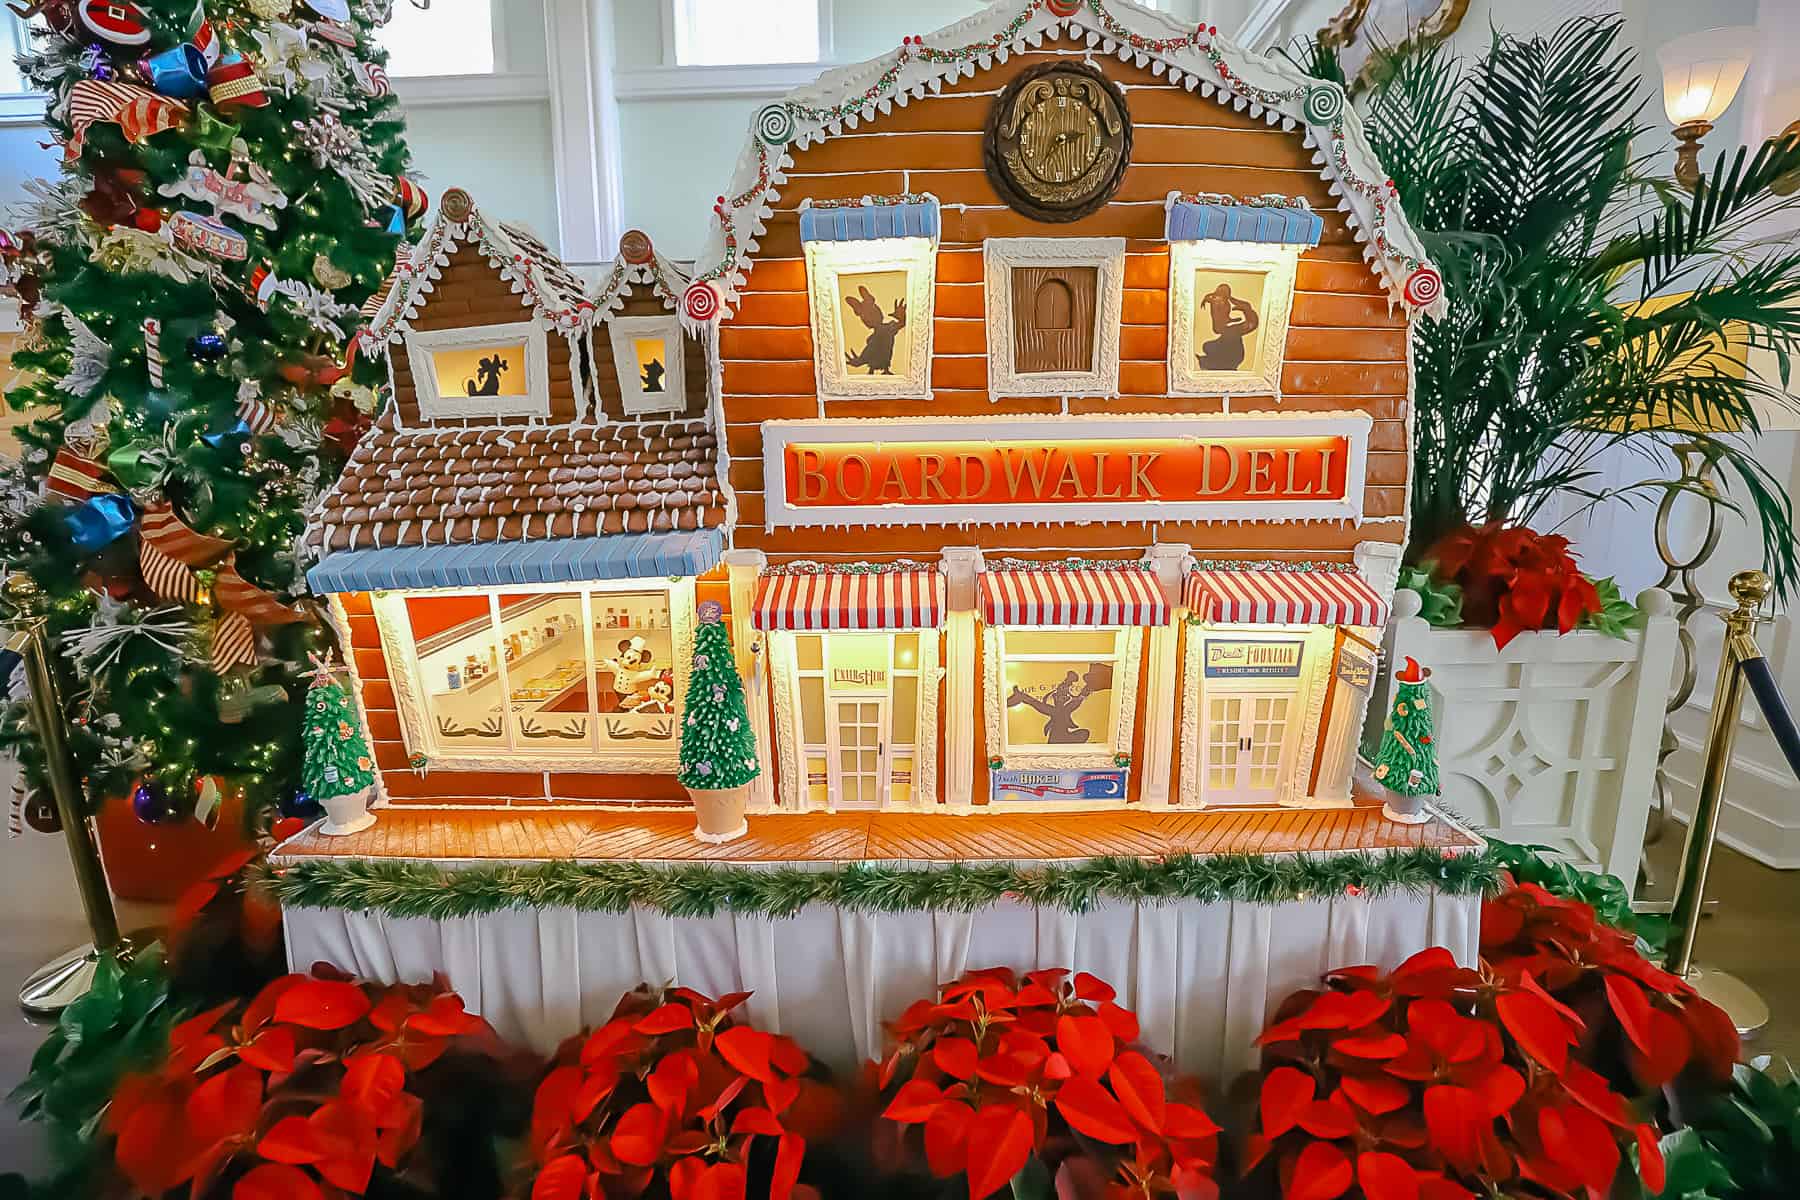 A closeup look at the gingerbread display